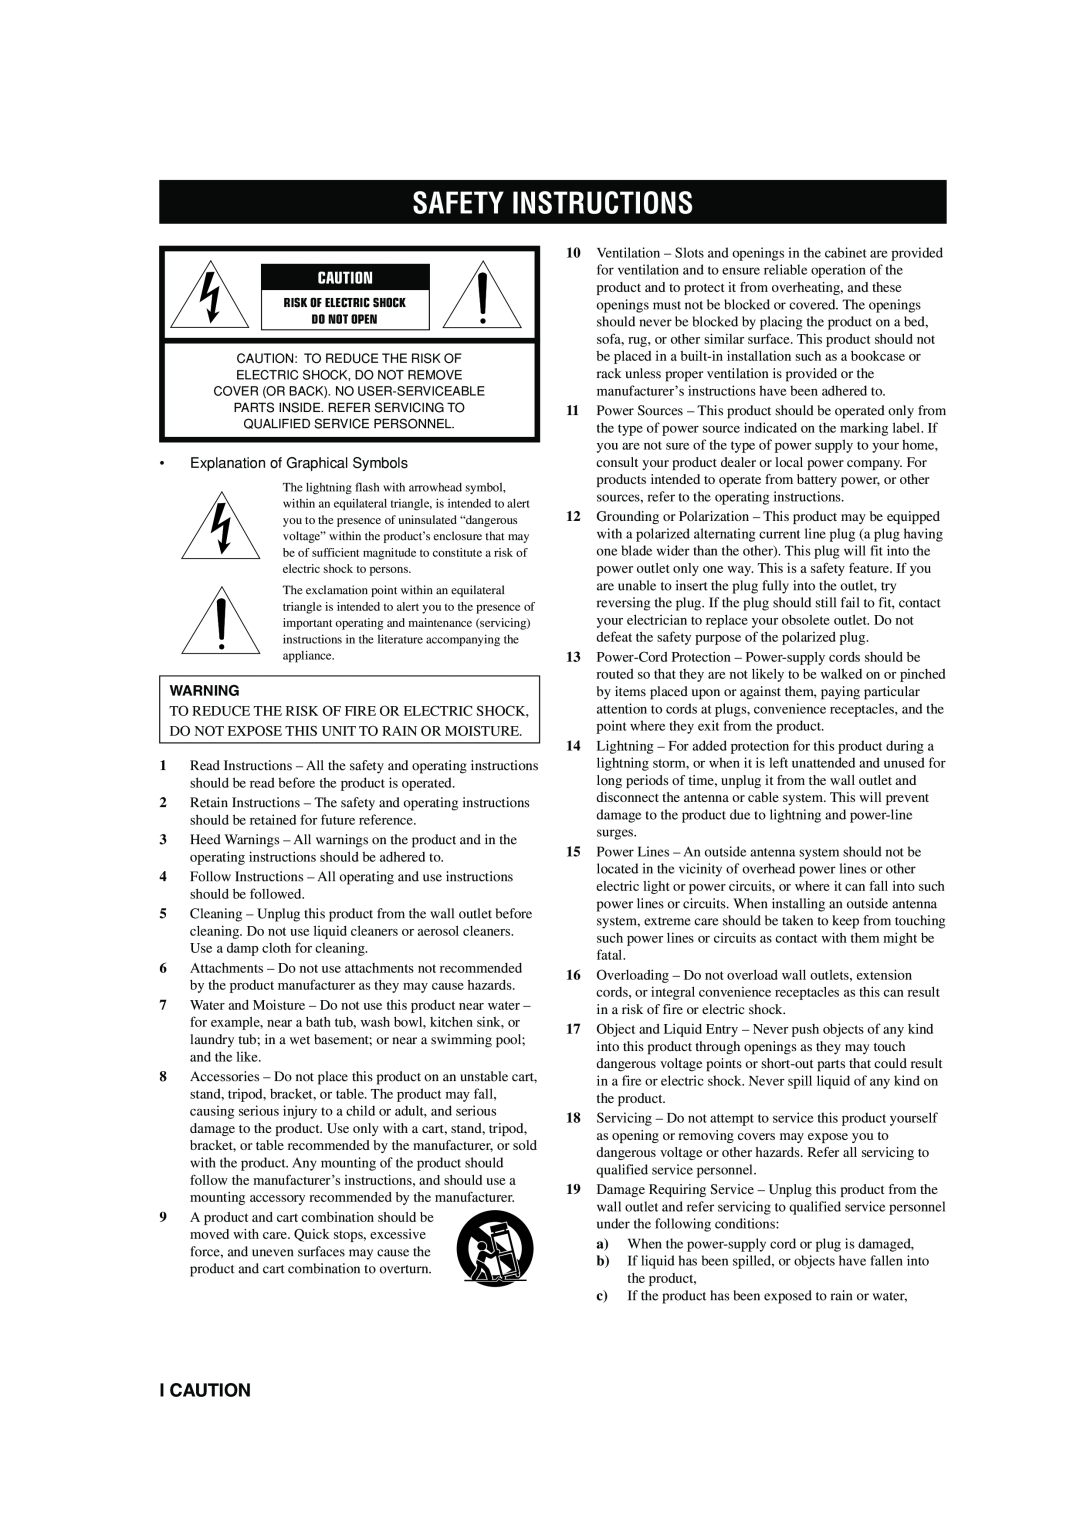 Yamaha HTR-5560 owner manual Safety Instructions, I Caution 